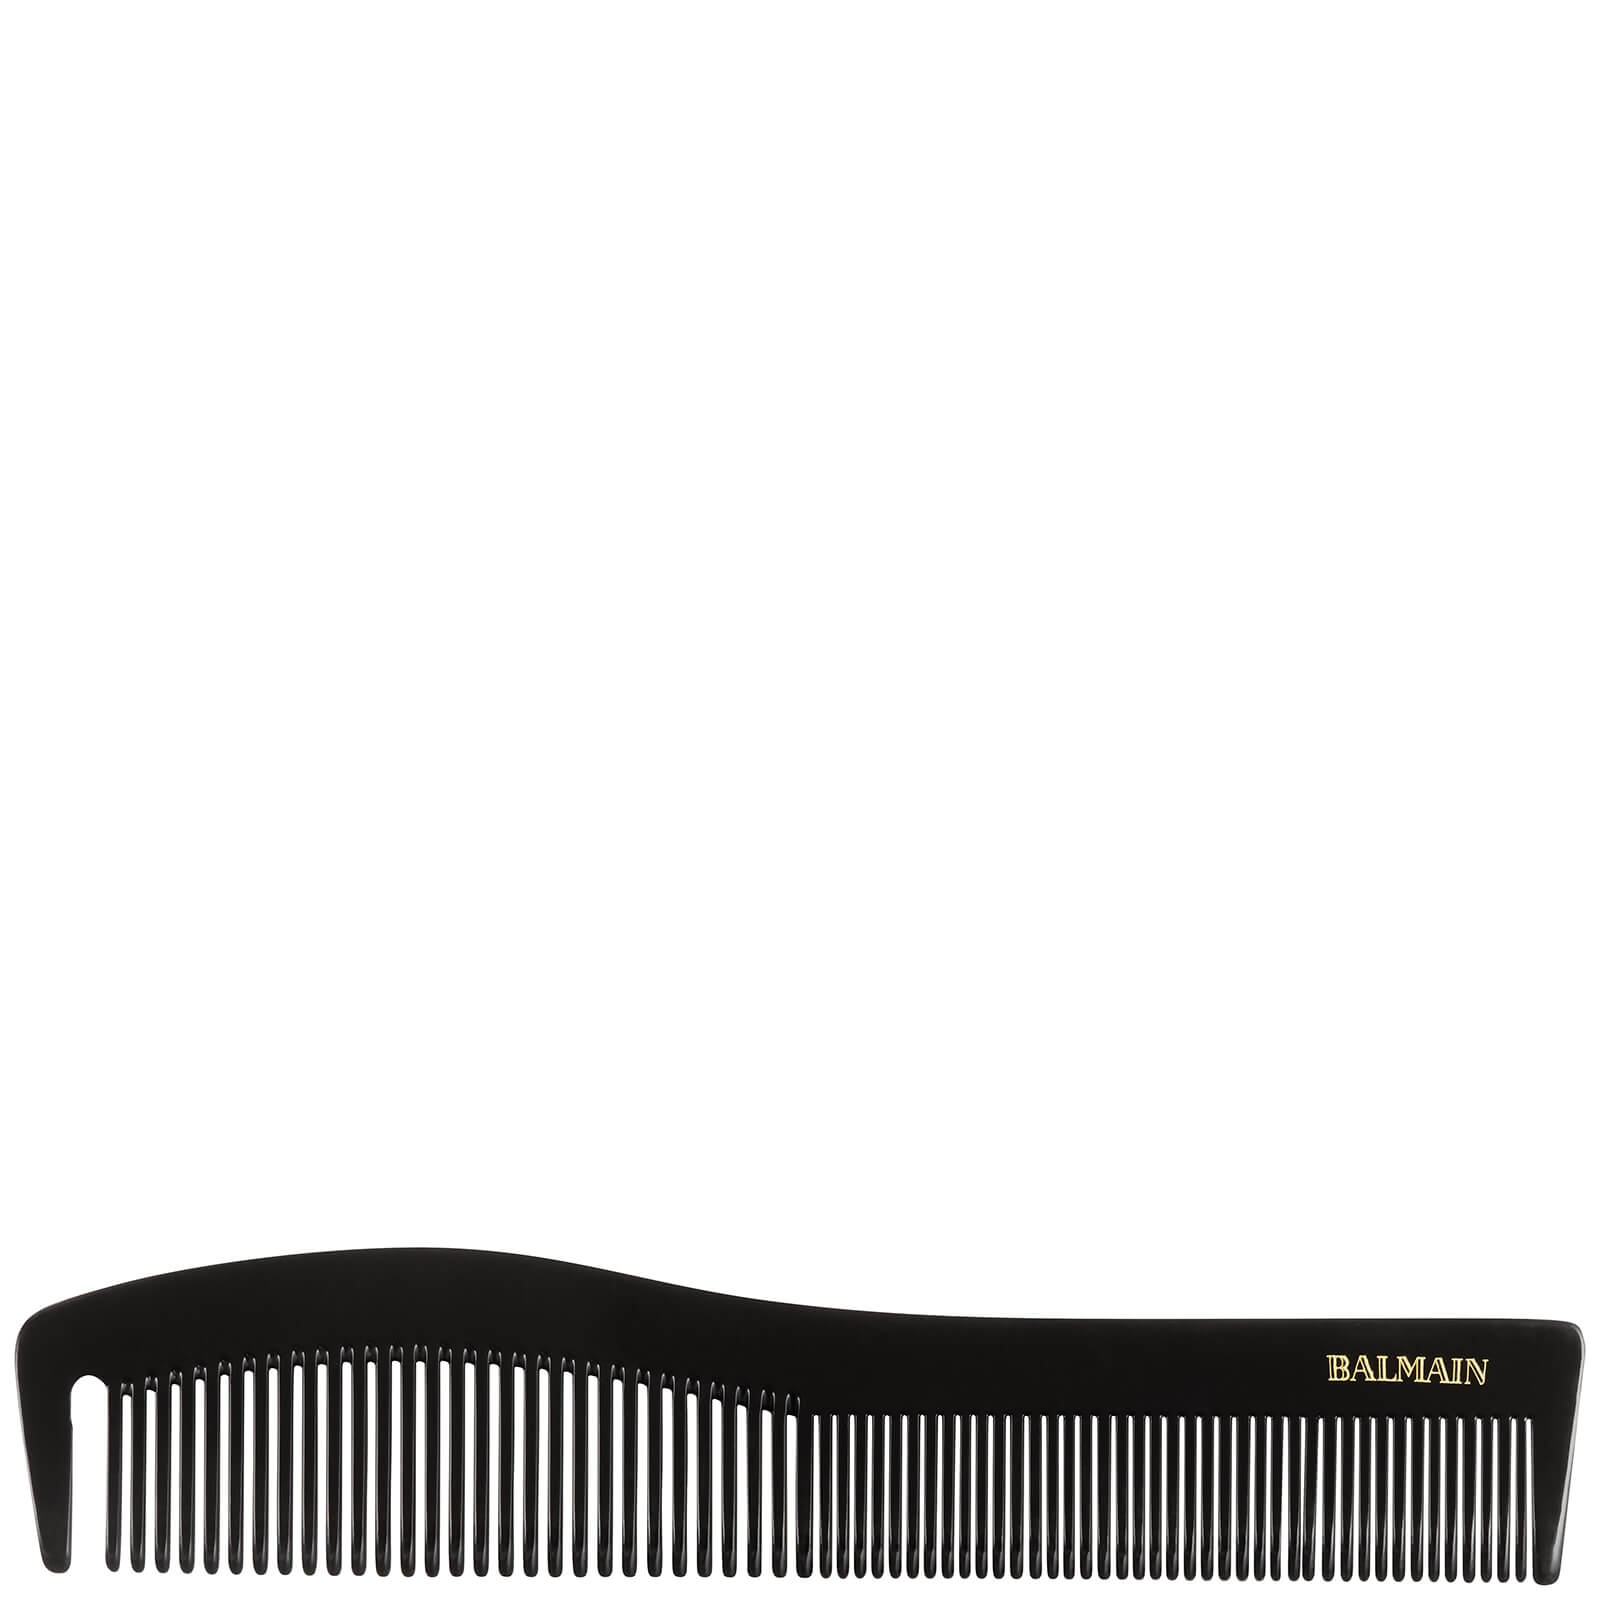 Balmain Cutting Comb - Black and White